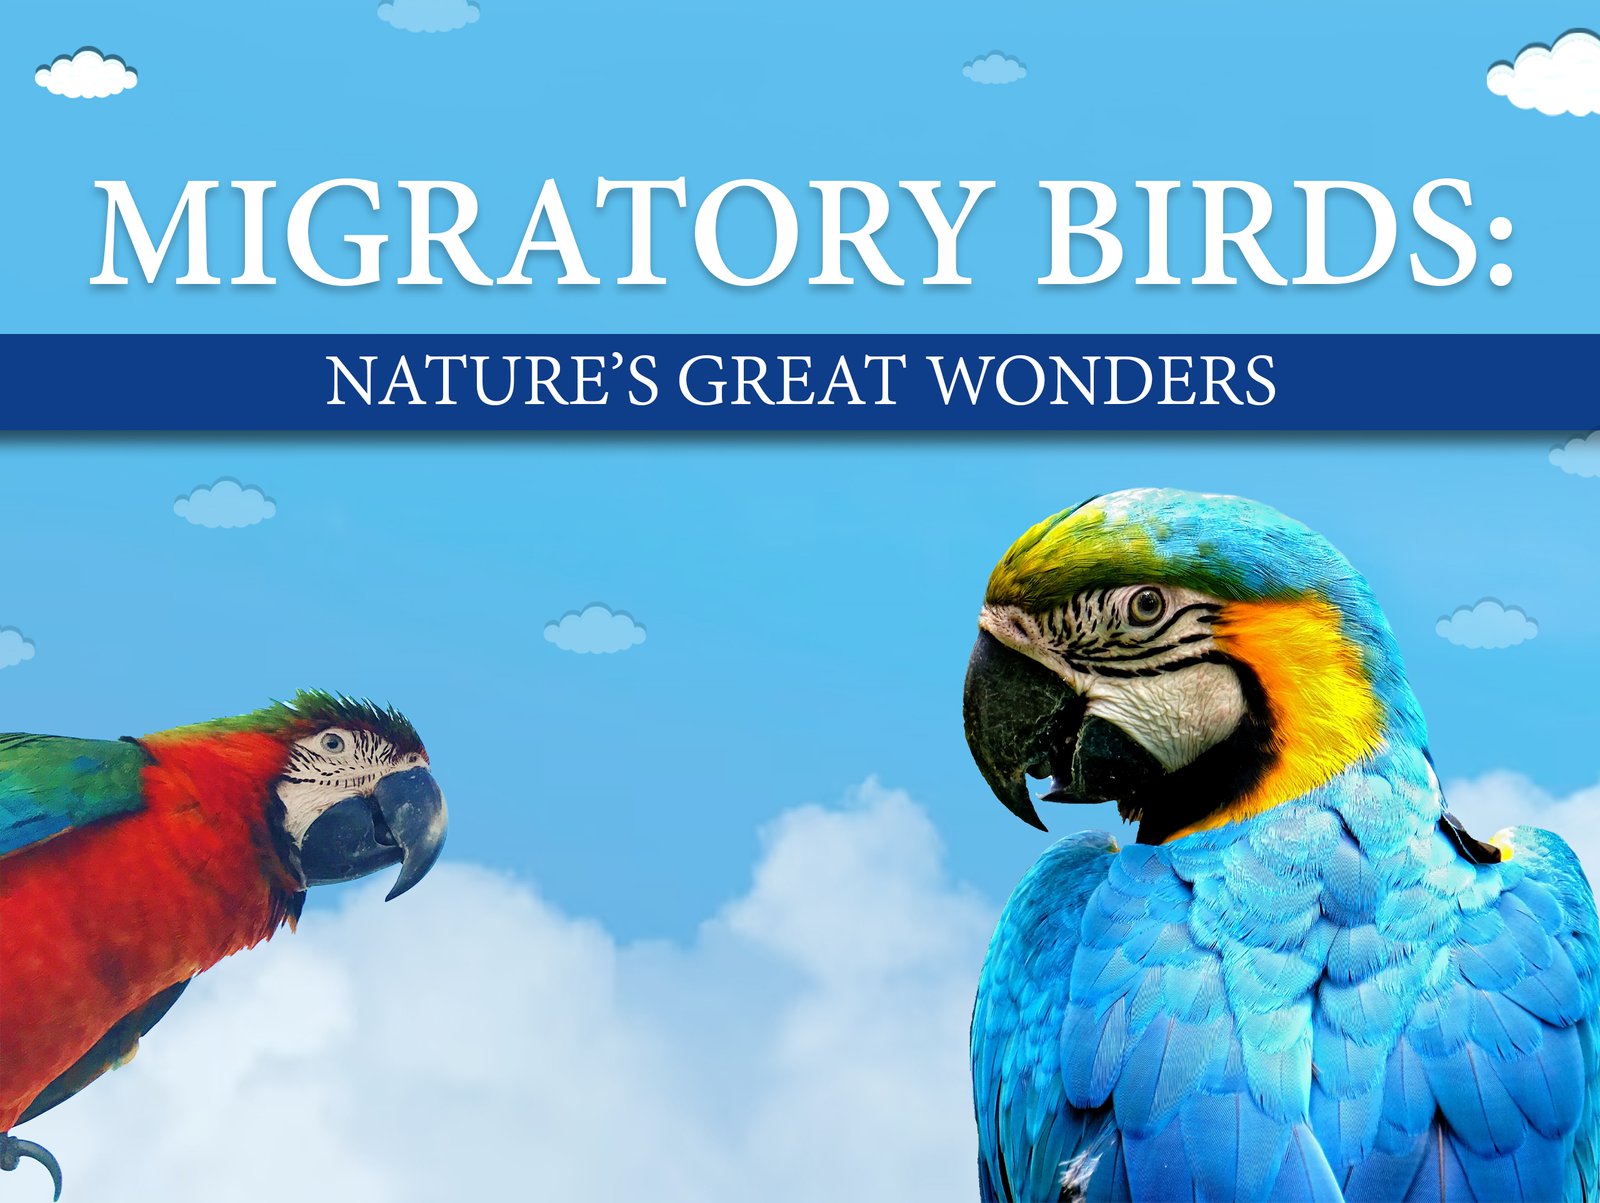 Migratory birds poster